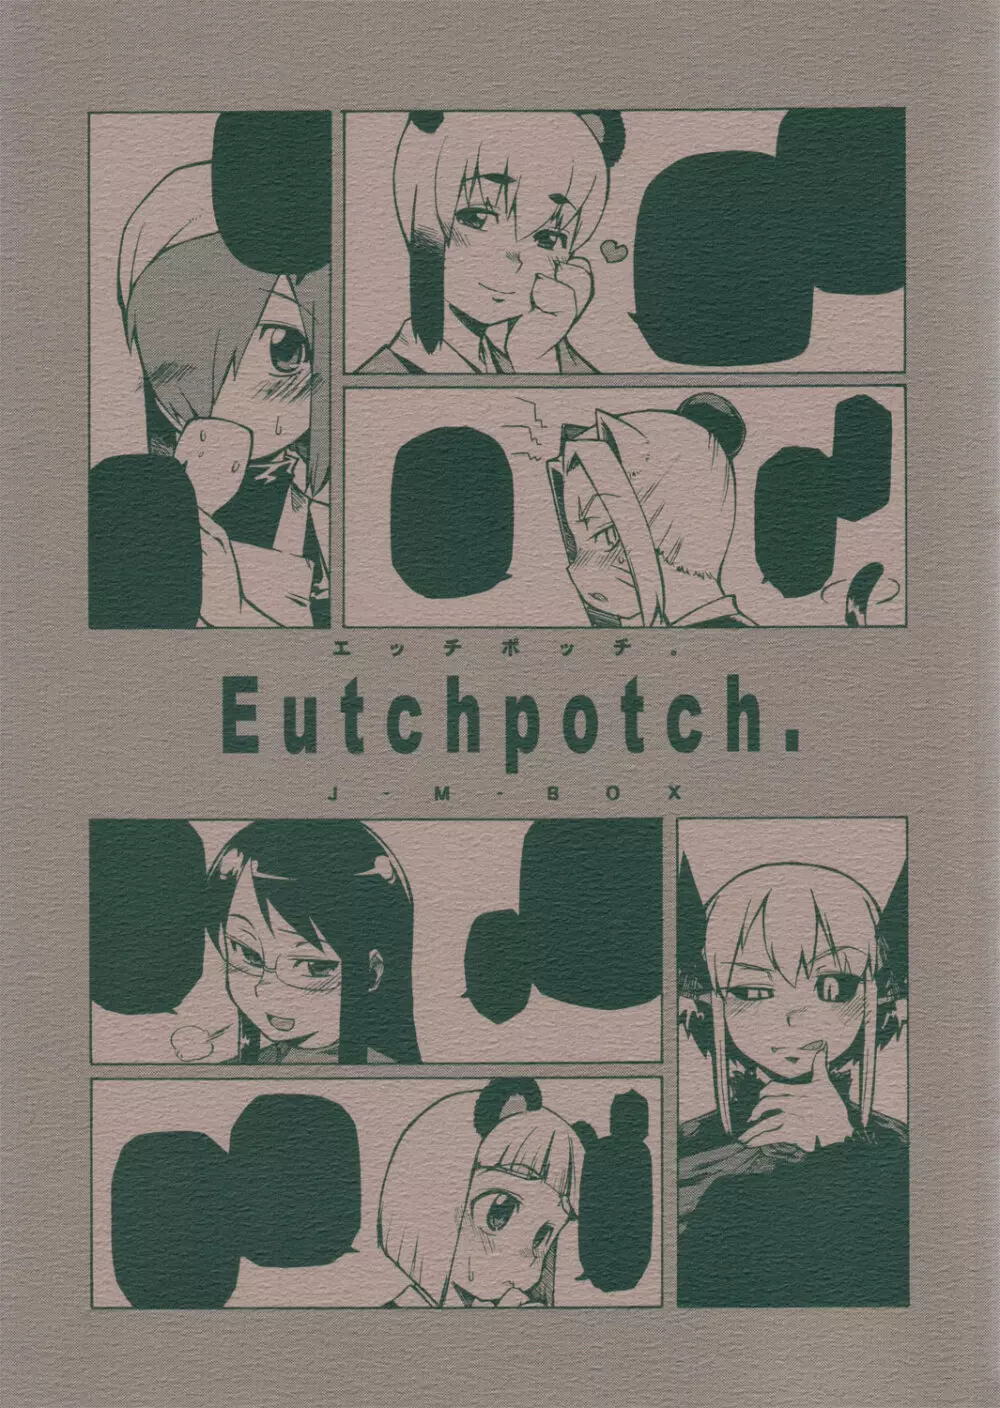 Eutchpotch